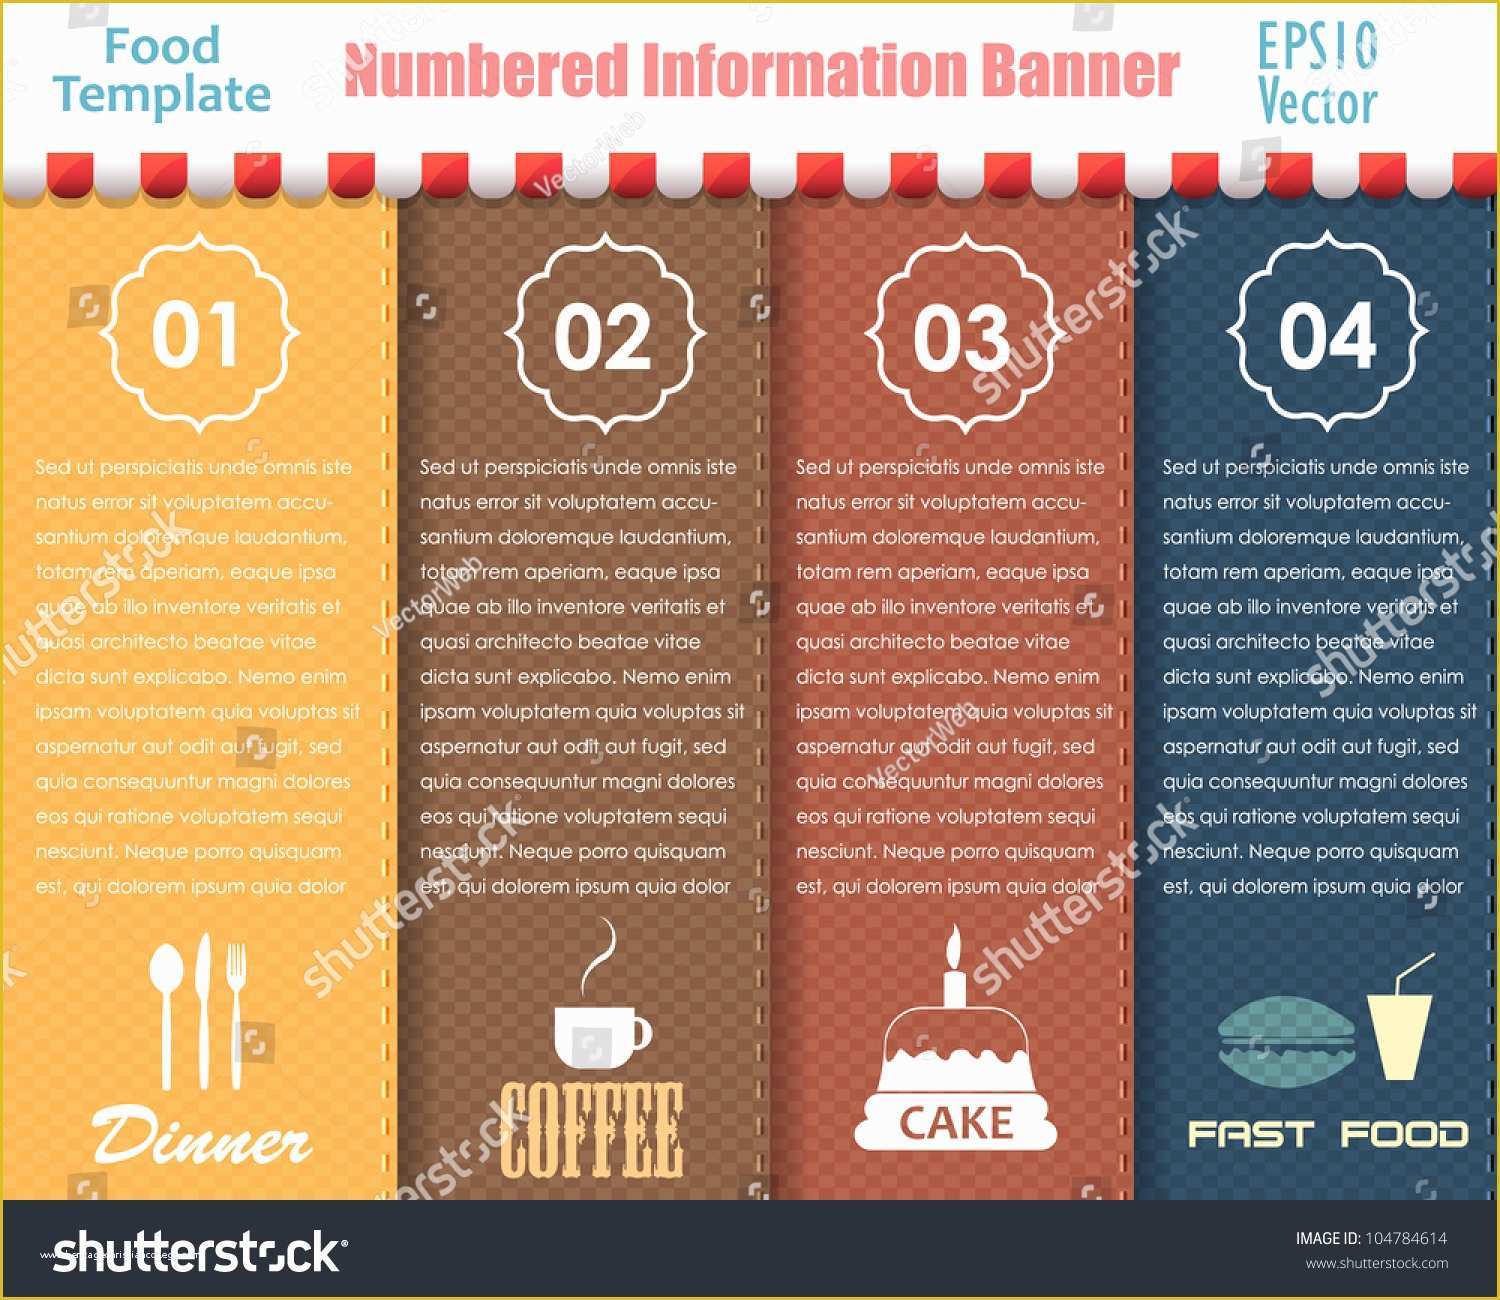 Food Banner Design Template Free Of Numbered Information Food Template Banner Vintage Pattern